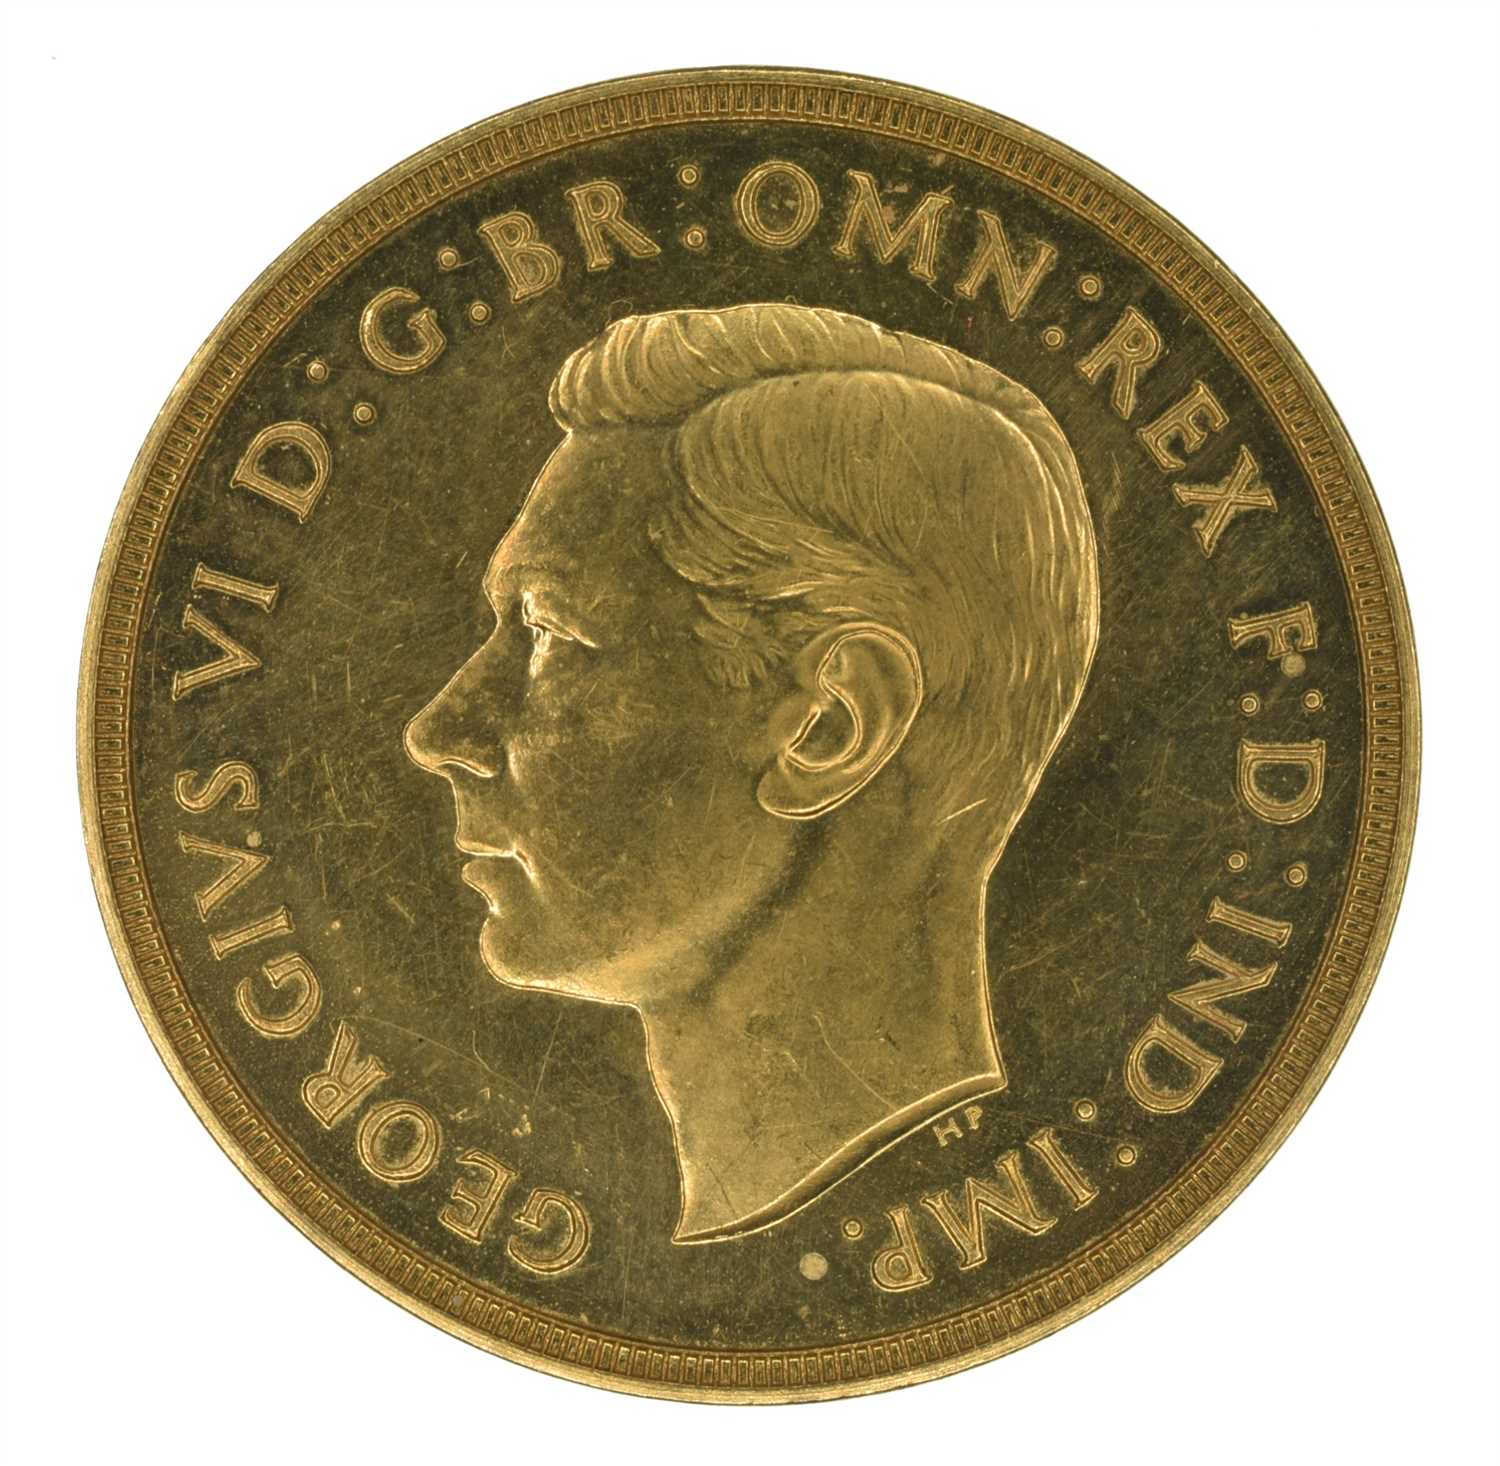 Lot 79 - King George VI, Two Pounds, 1937, plain edge proof.